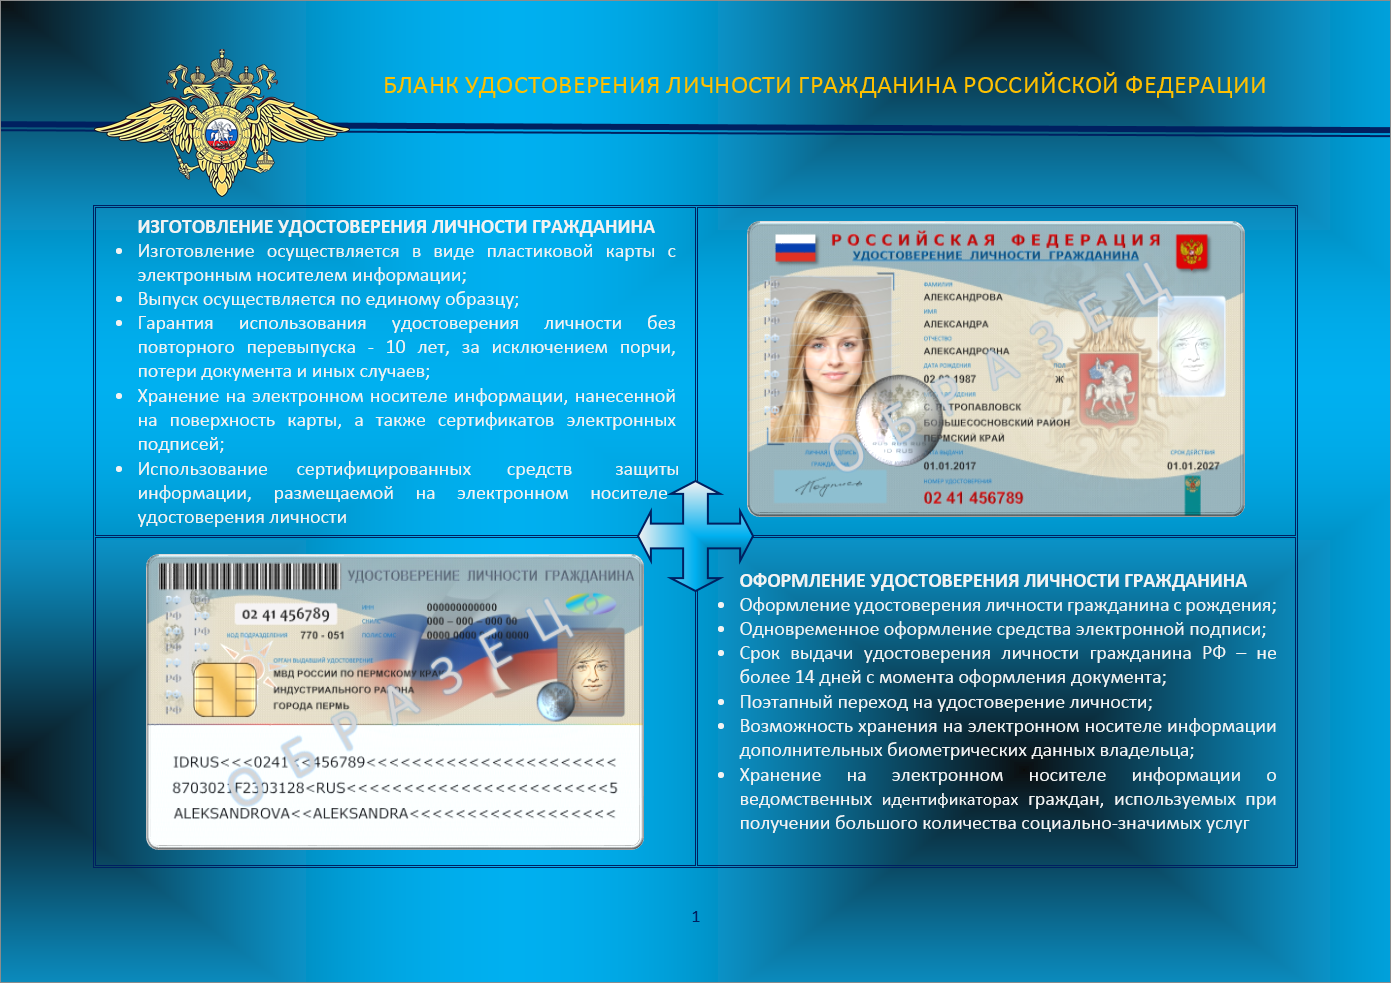 Electronic passport (Citizen ID) booklets - Longpost, Ministry of Internal Affairs, Identity card, Electronic passport, Russia